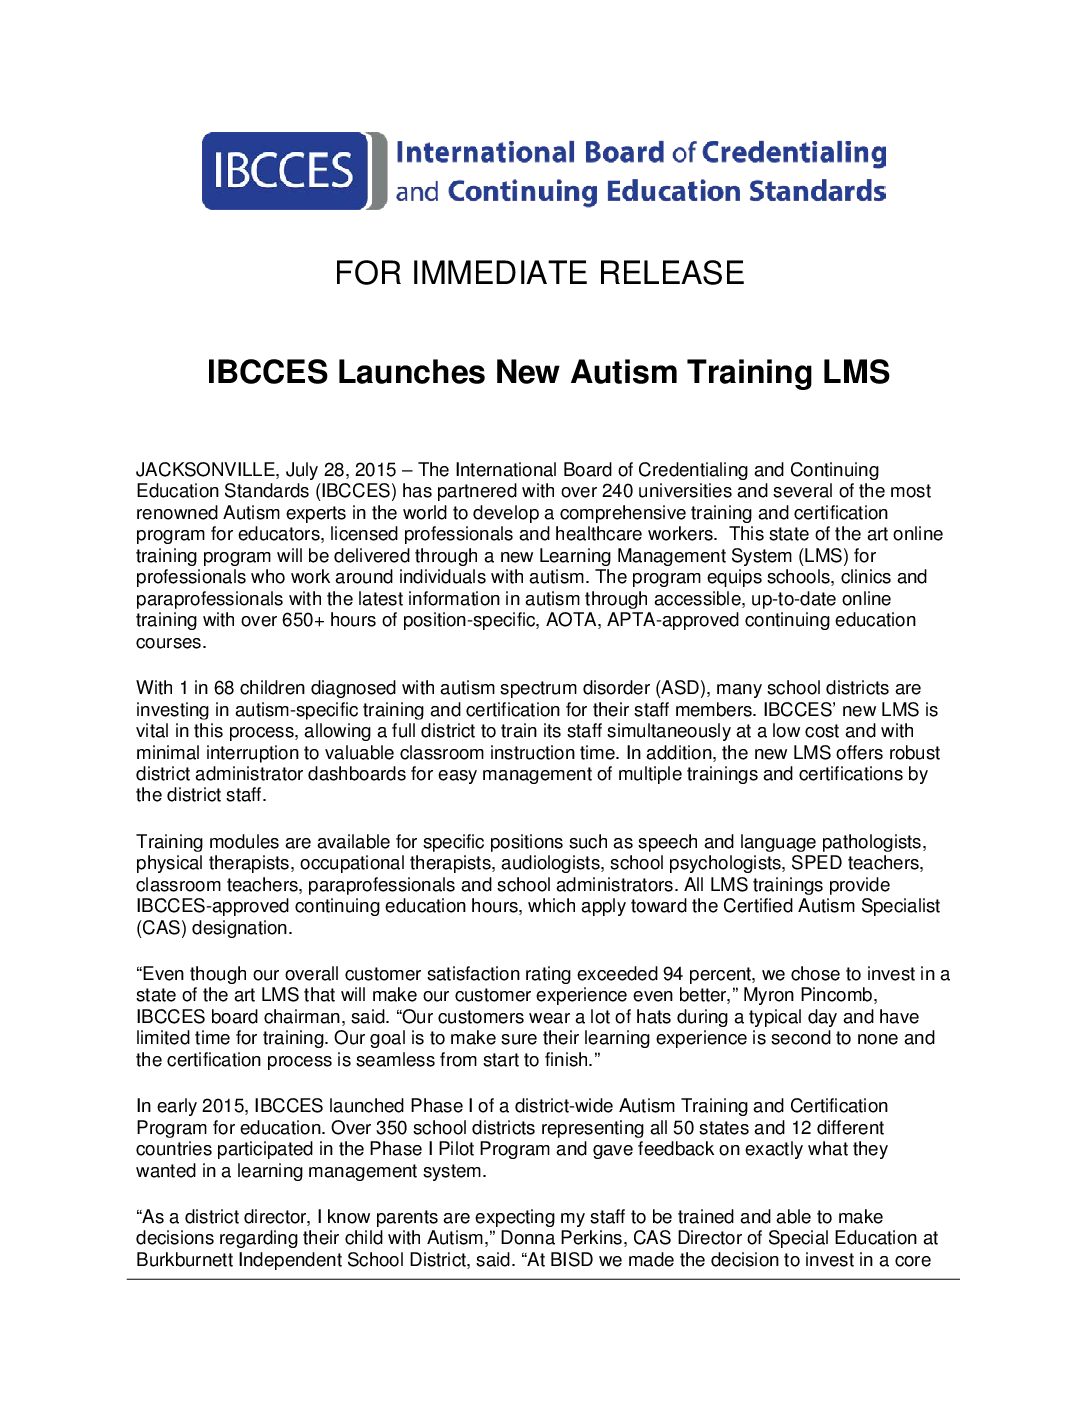 PR - 072815 - IBCCES Launches New Autism Training LMS - IBCCES